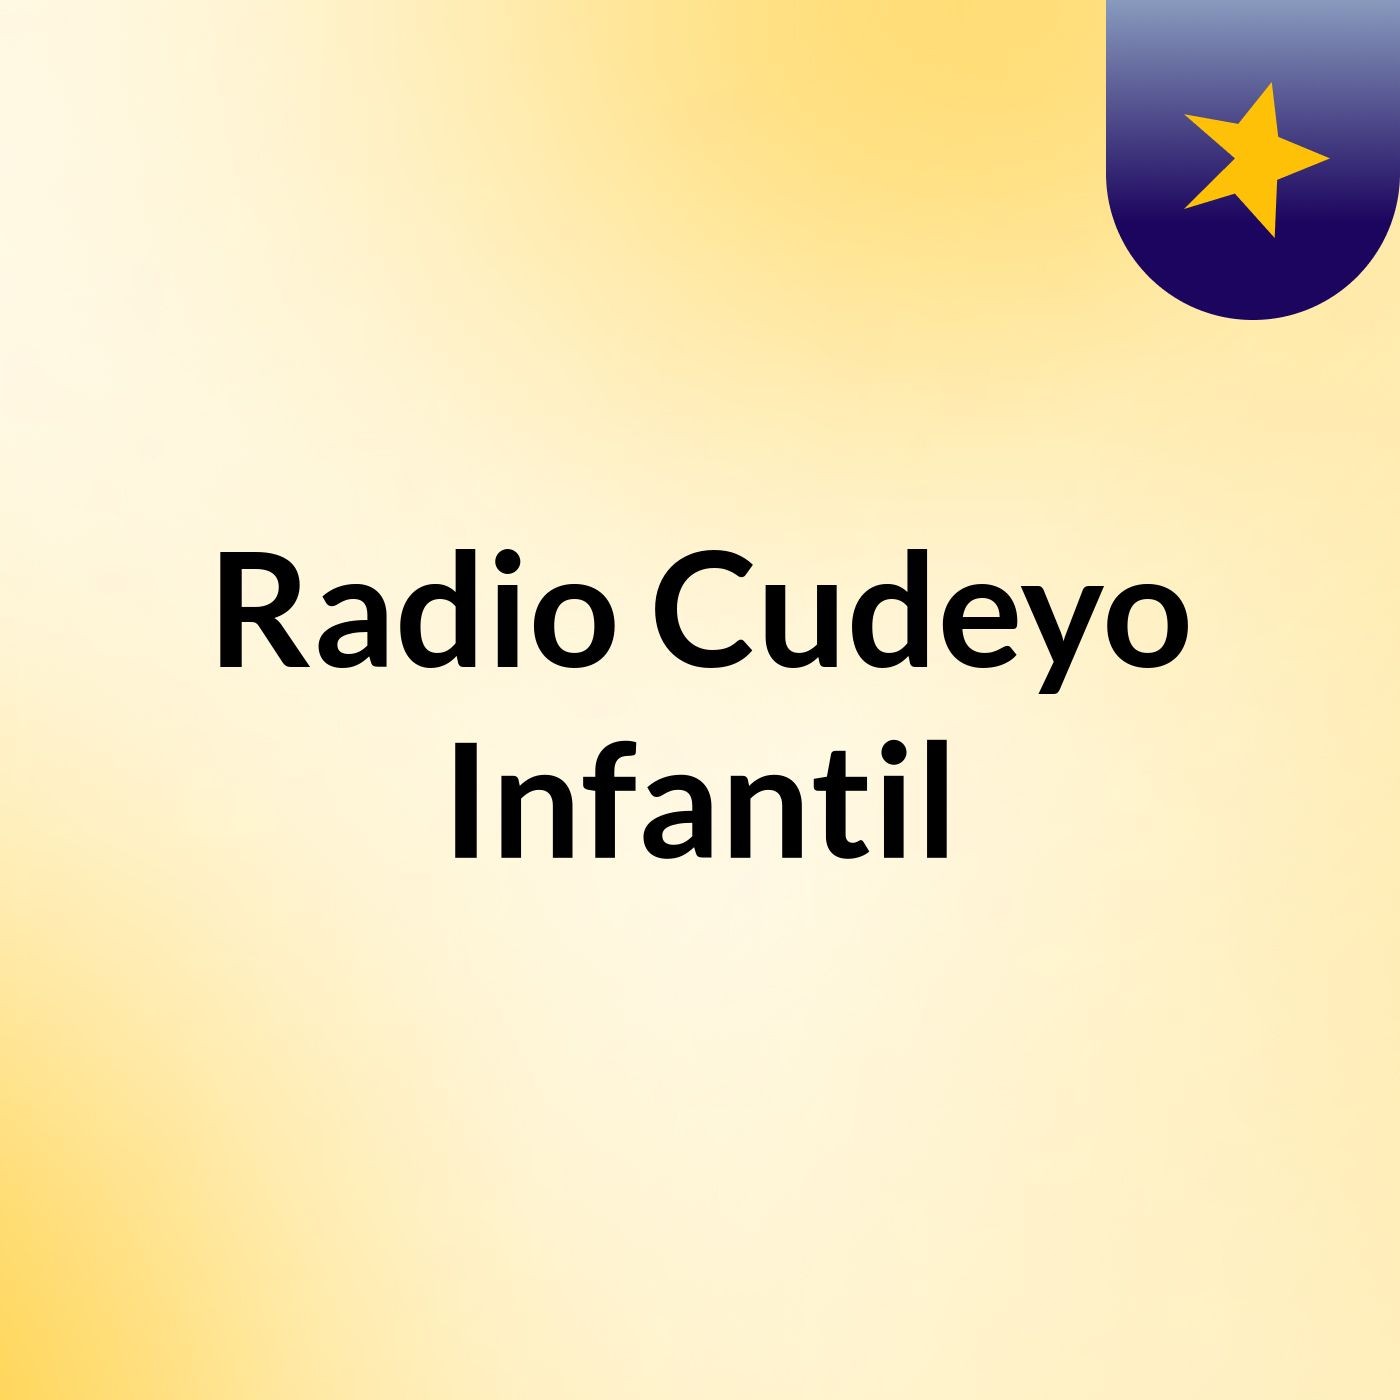 Radiocudeyoinfantil 01/16/Prueba